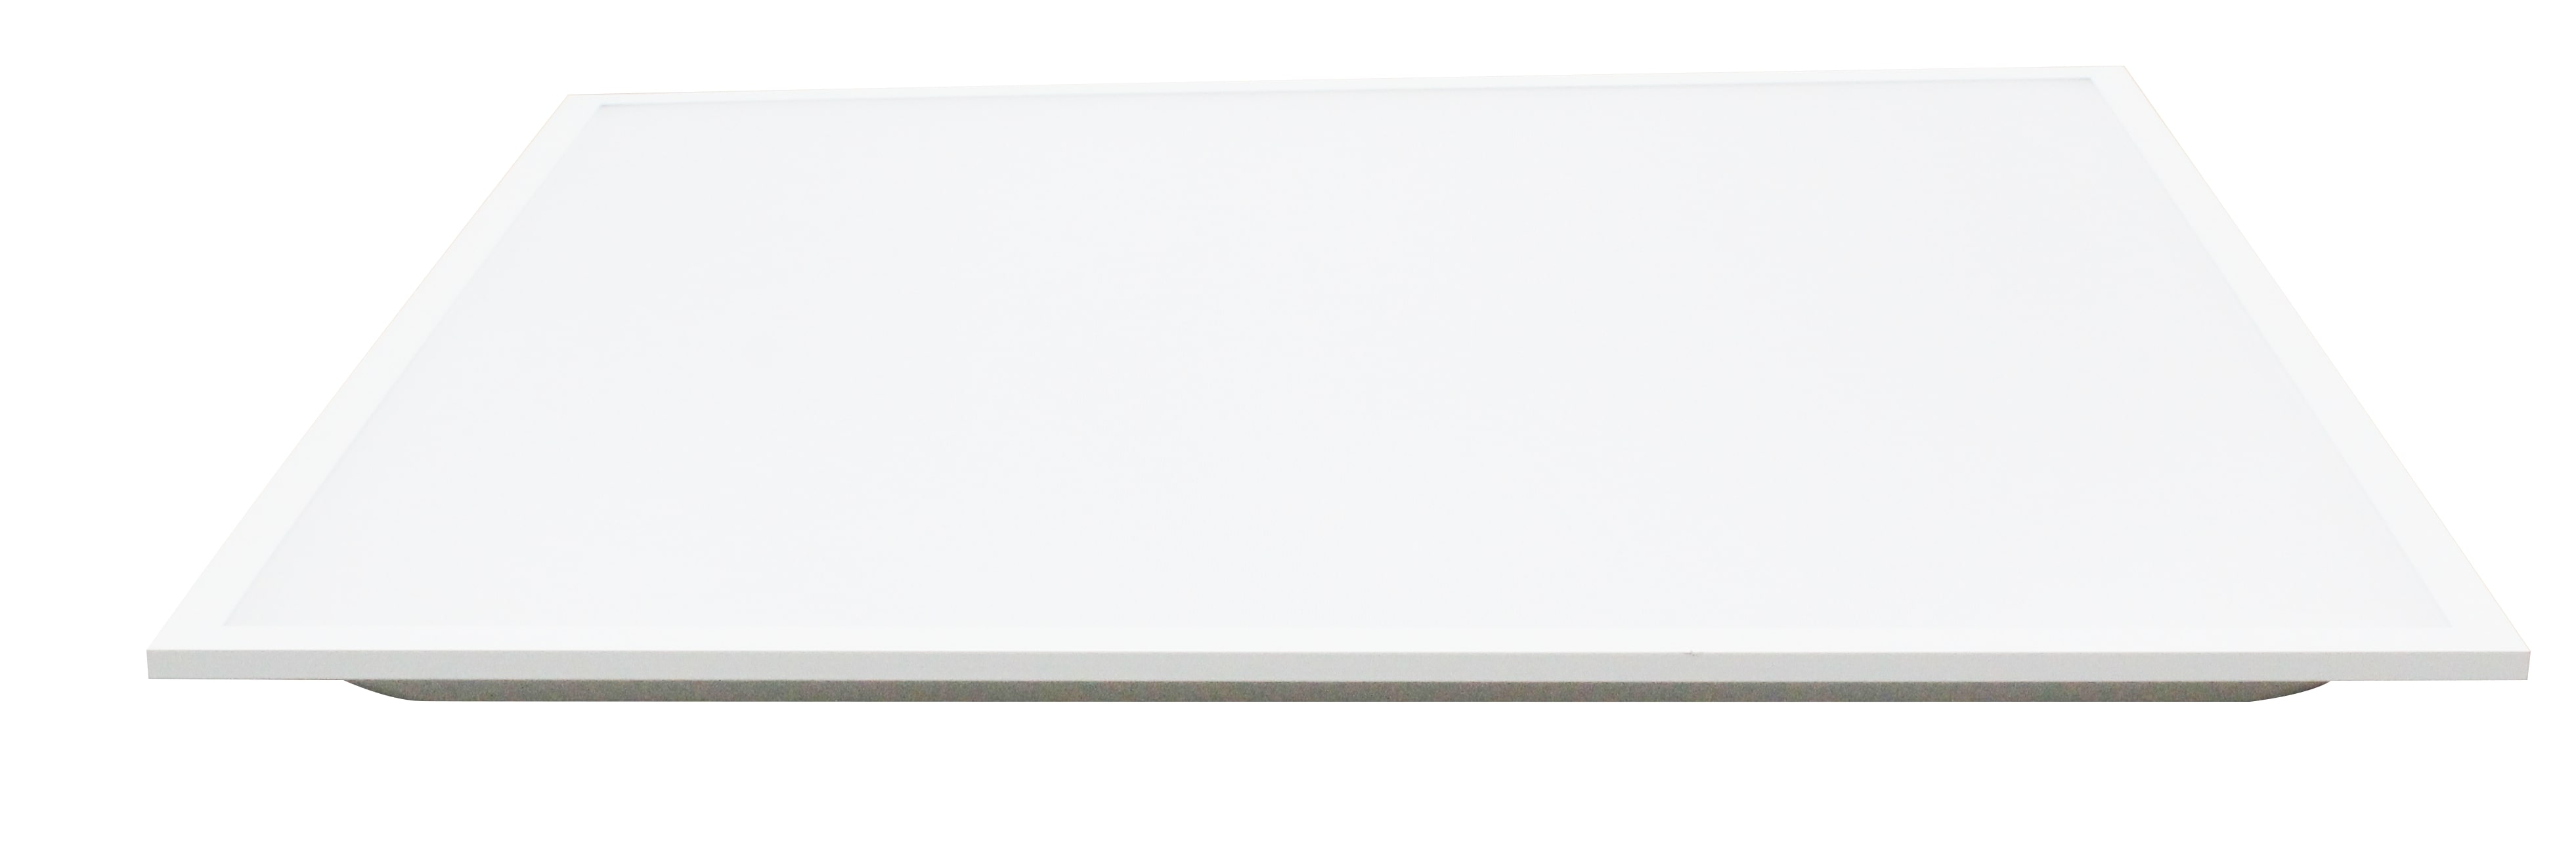 LED-Panel BACKLIGHT BASELine, 35 W, 4.550 lm neutralweiß 840, 620x620 mm, 130 lm/W, nicht dimmbar